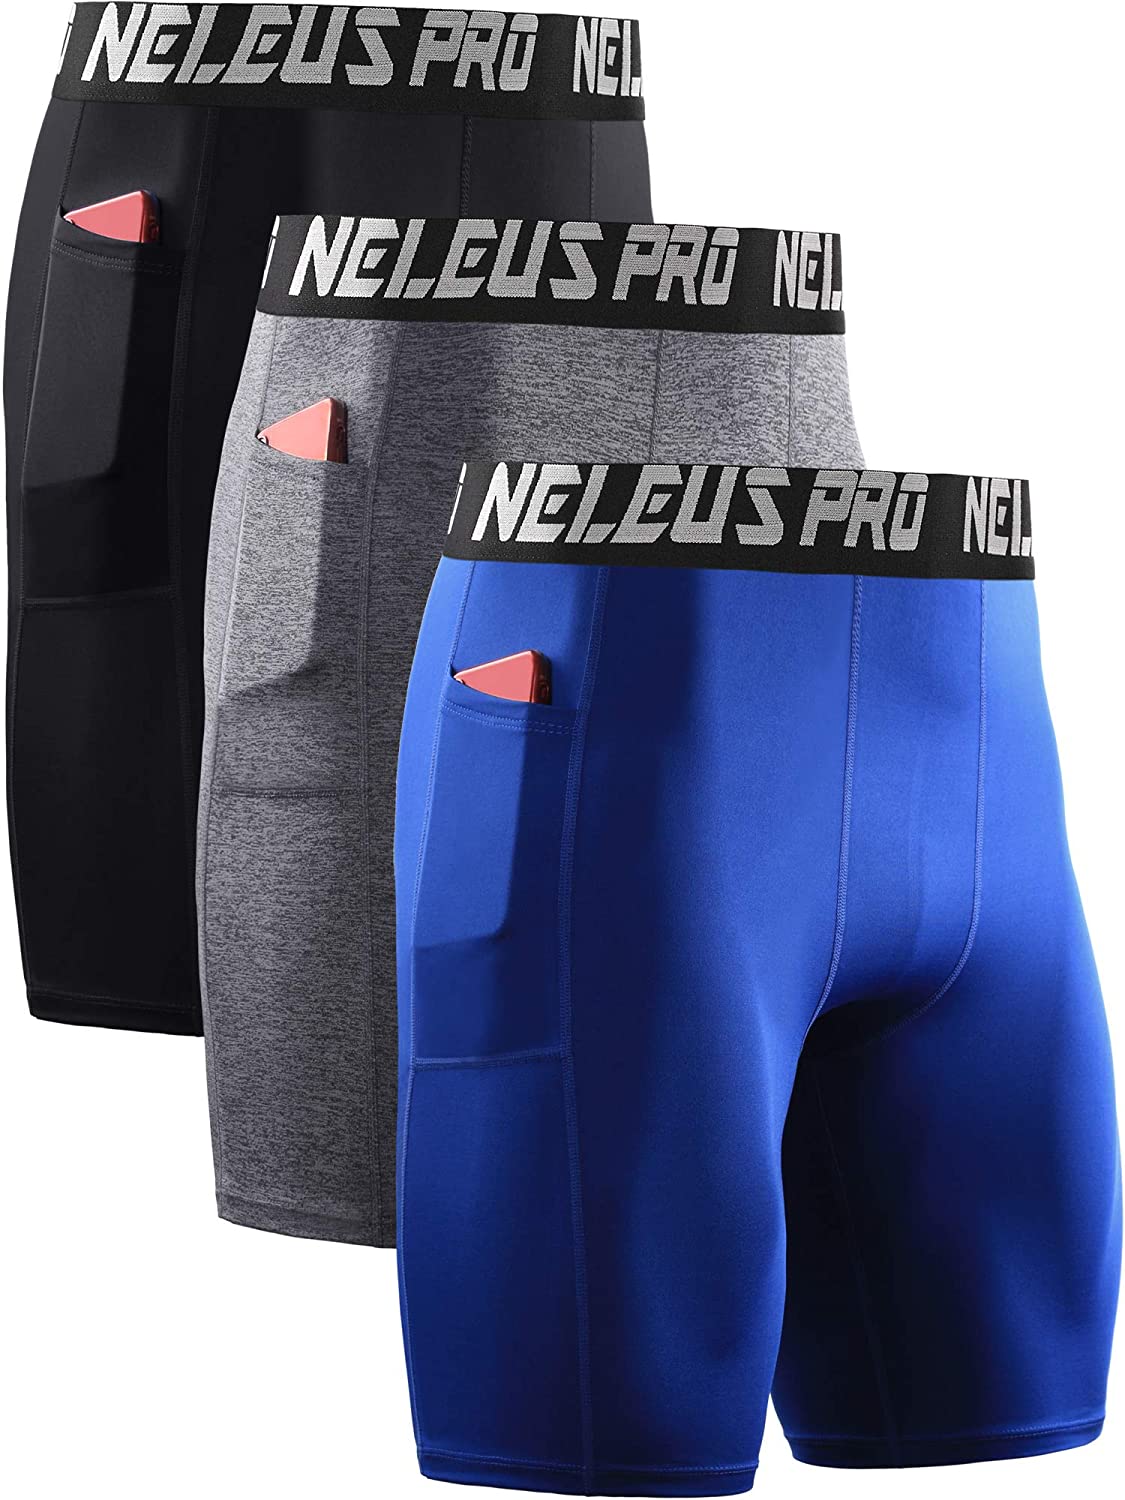 Buy Neleus Men's 3 Pack Compression Shorts Athletic Sport